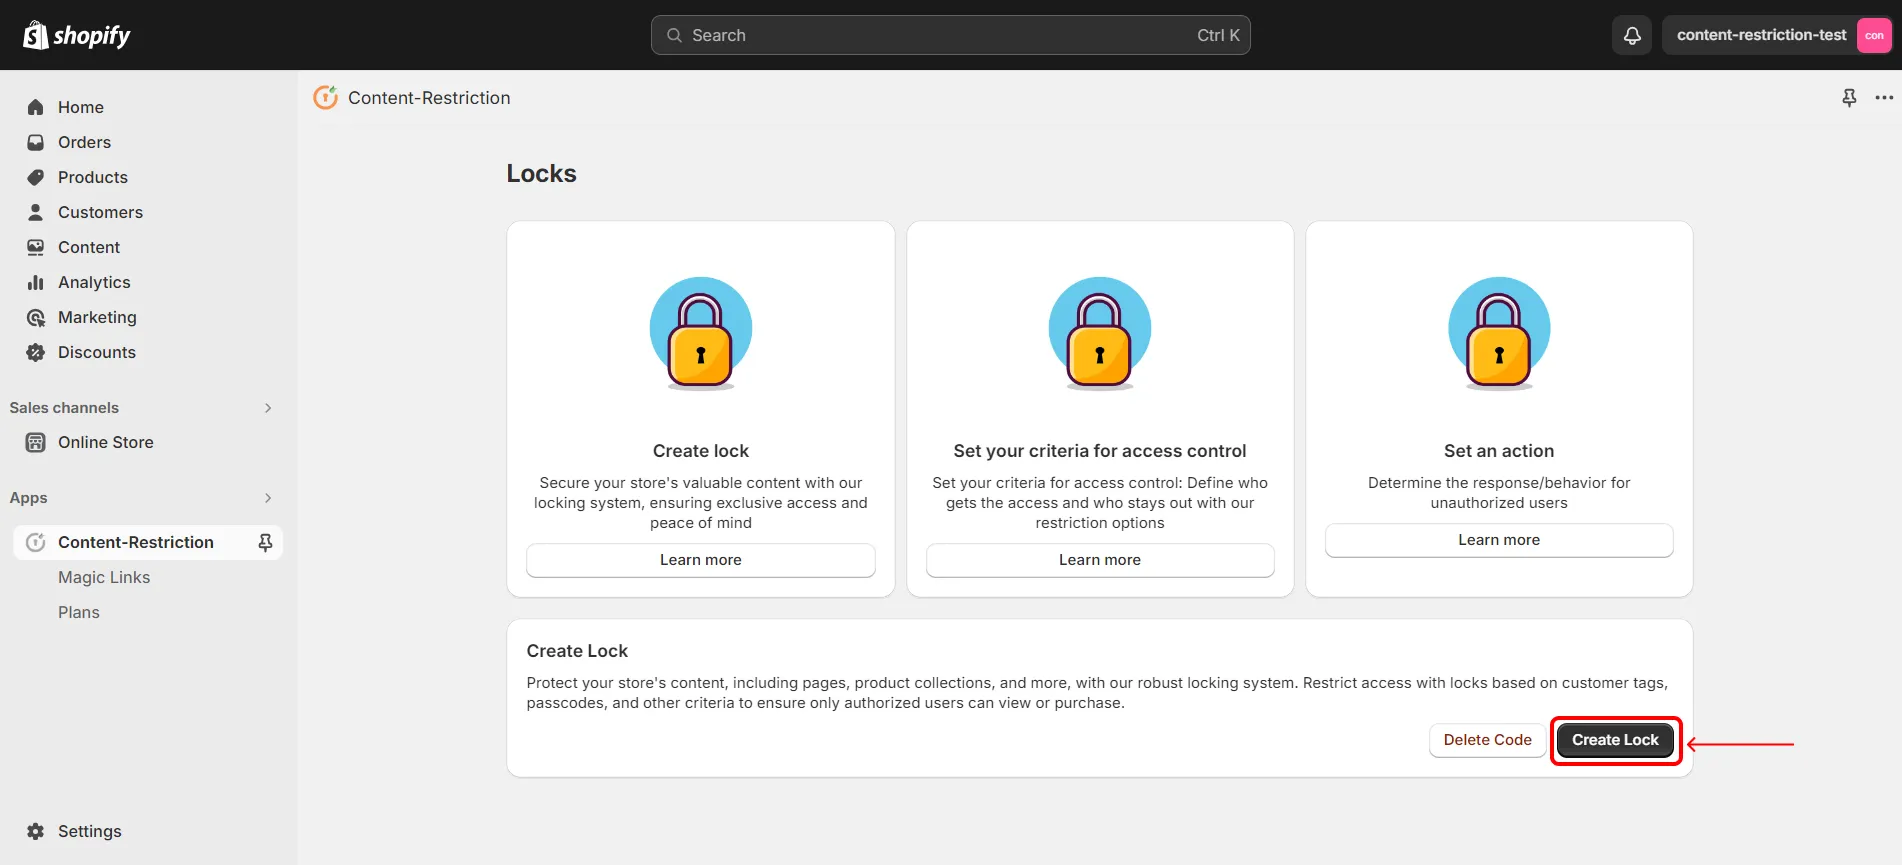 Shopify LockOn Restrict Content Application - - create lock